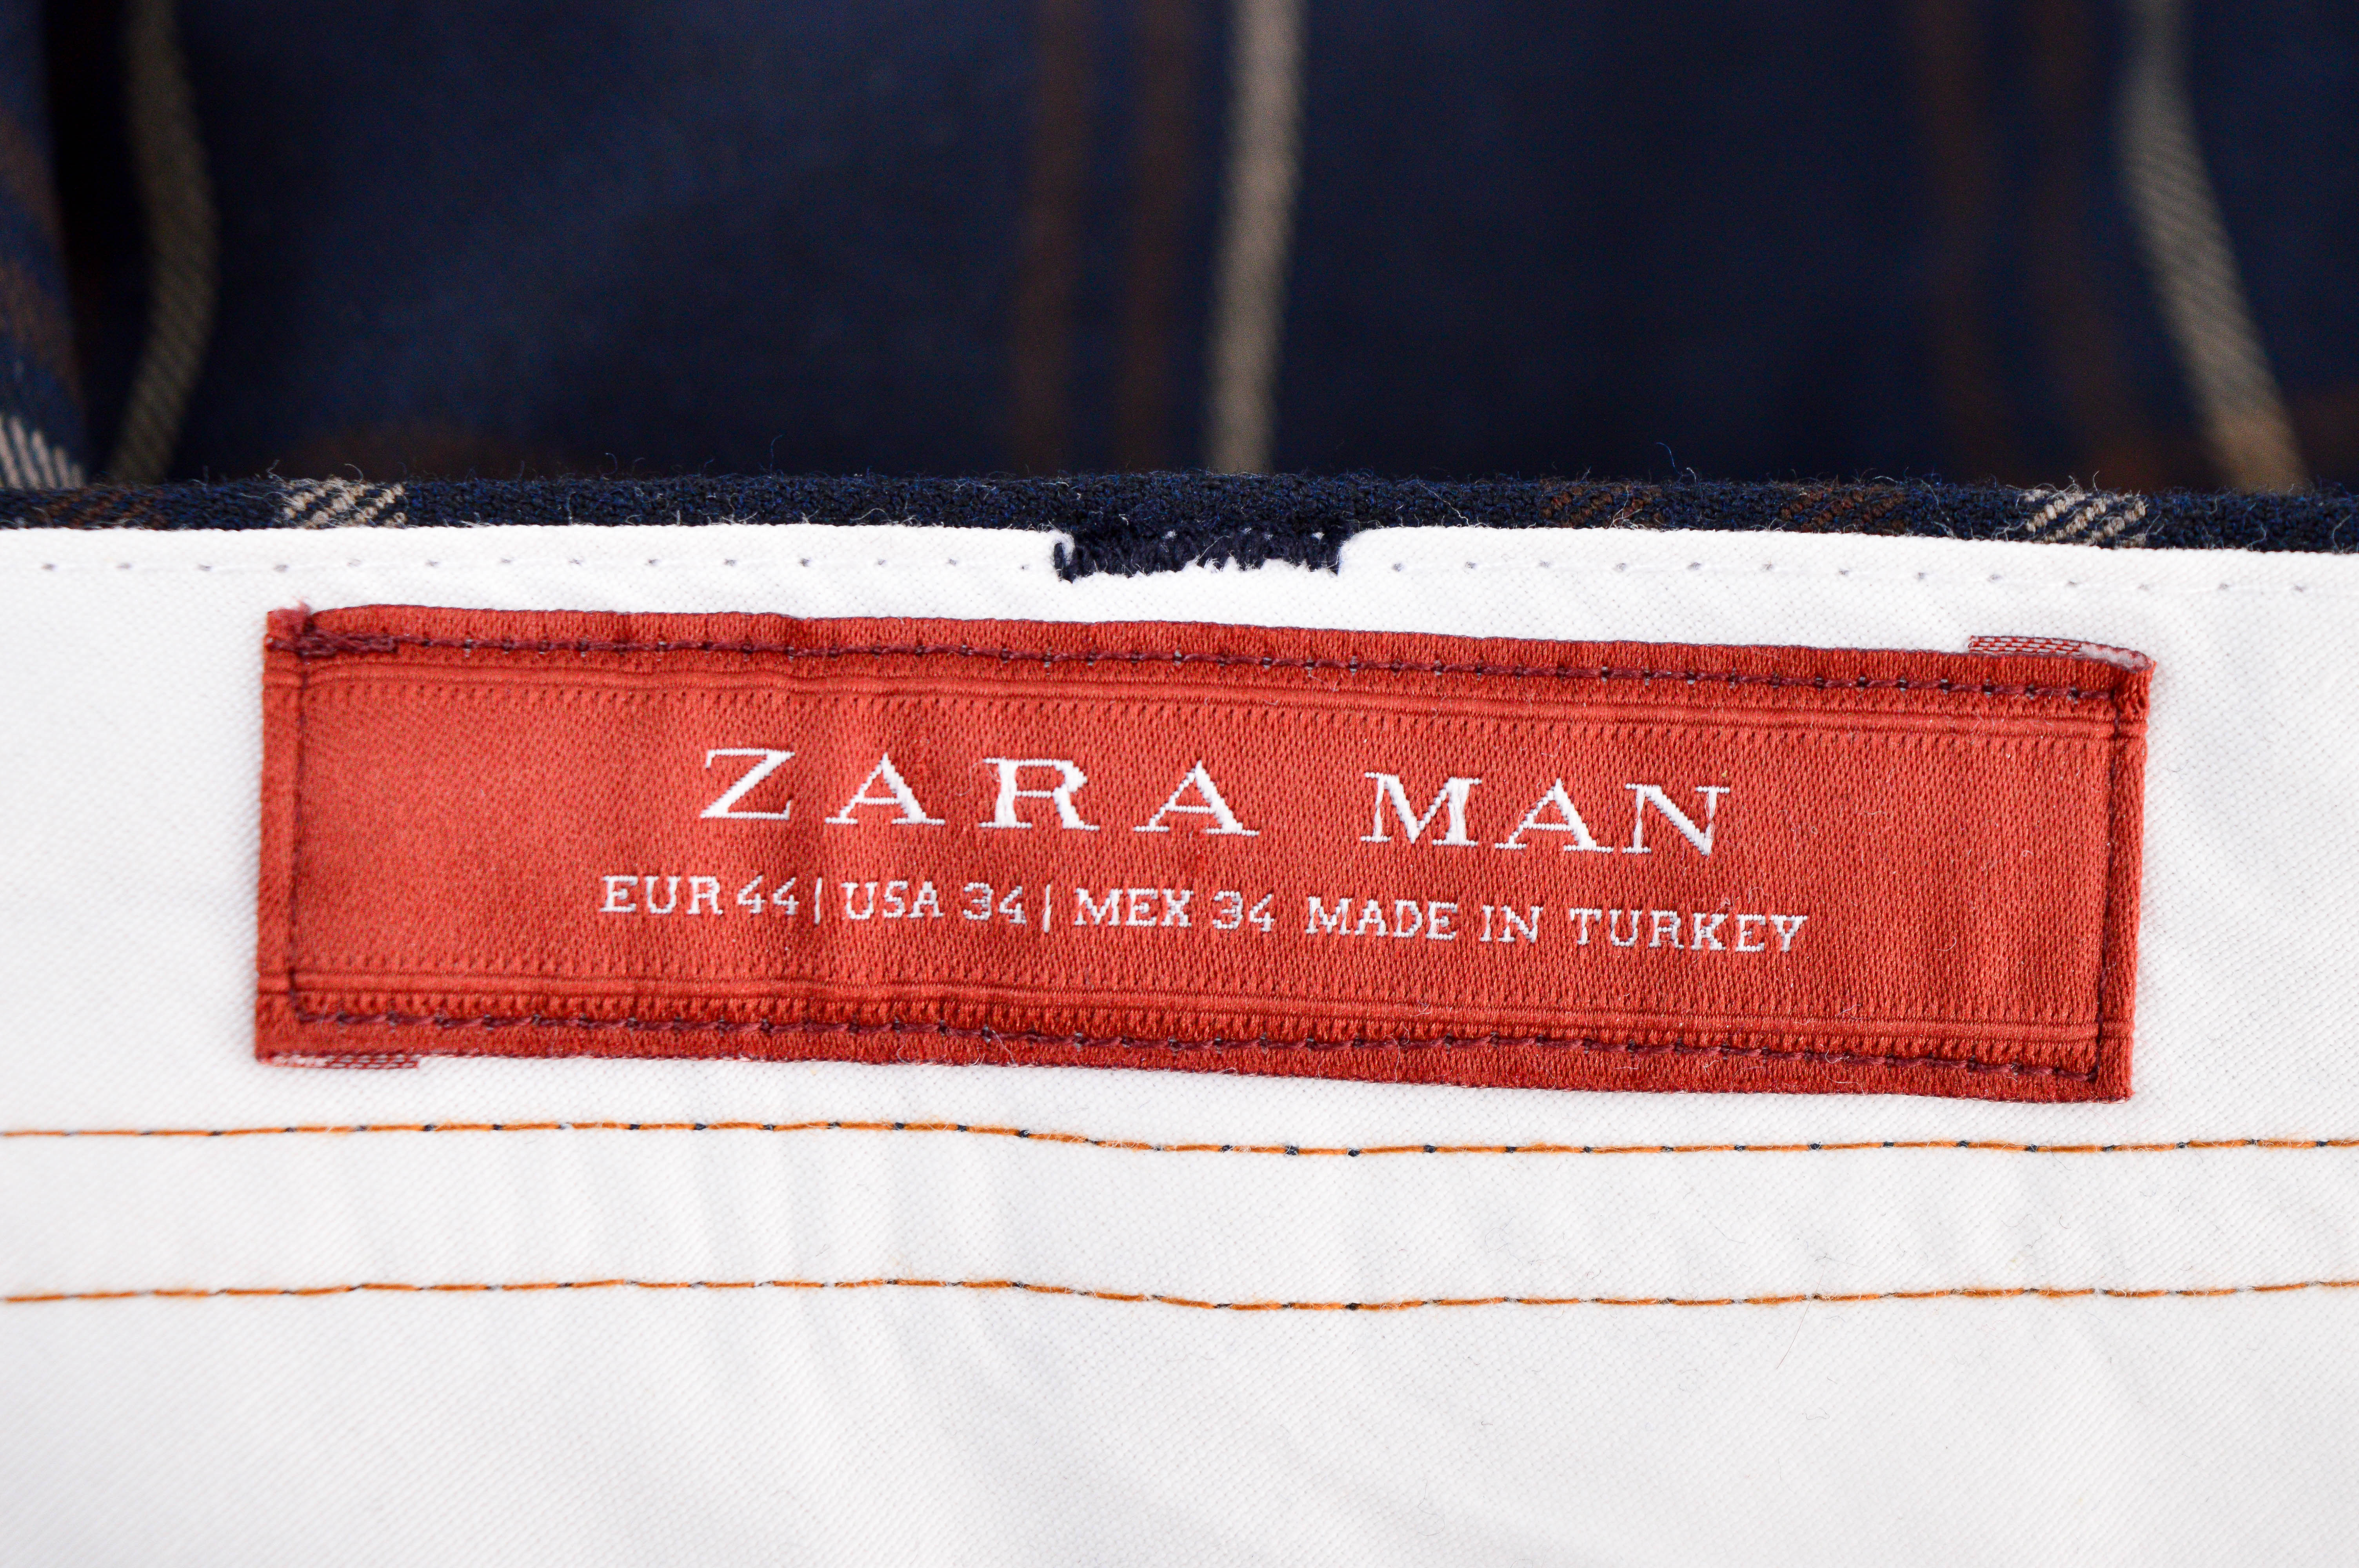 Męskie spodnie - ZARA Man - 2